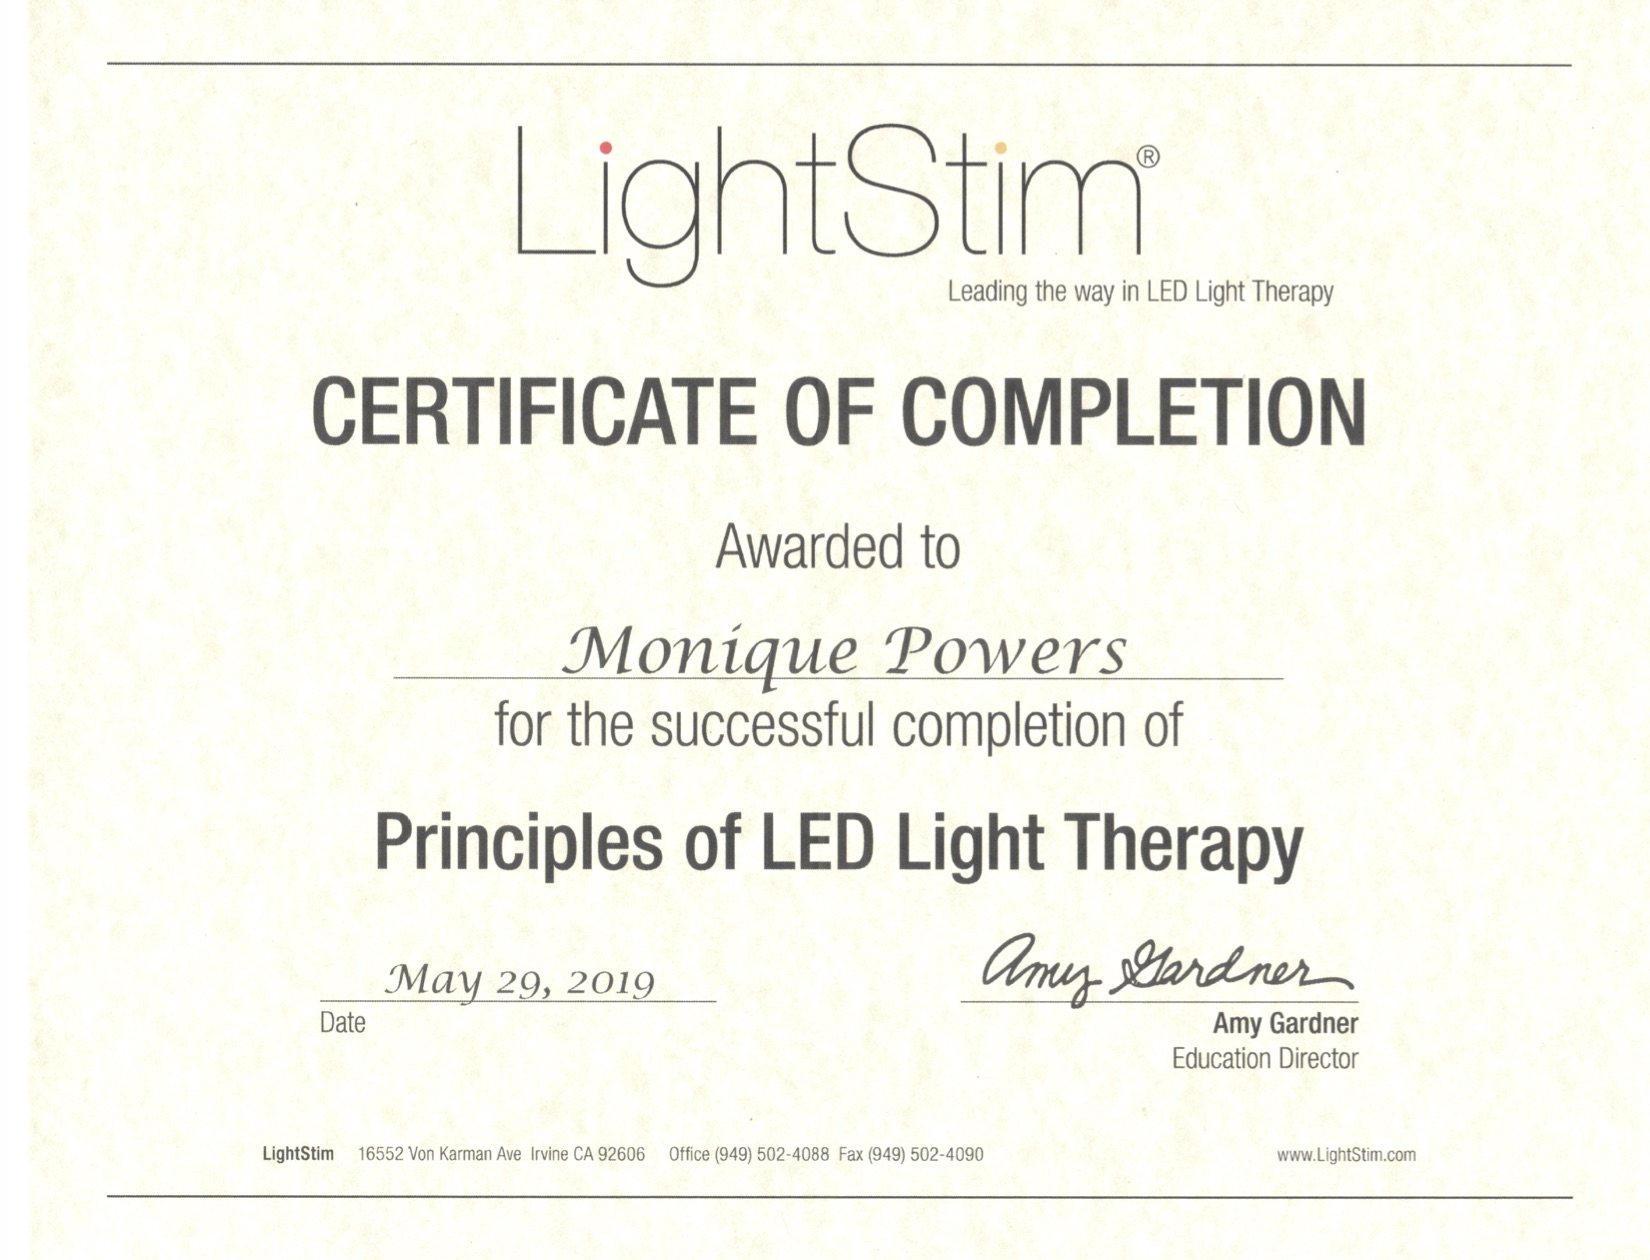 elleebana one shot lash lift certificate of completion for Monique Powers 2017